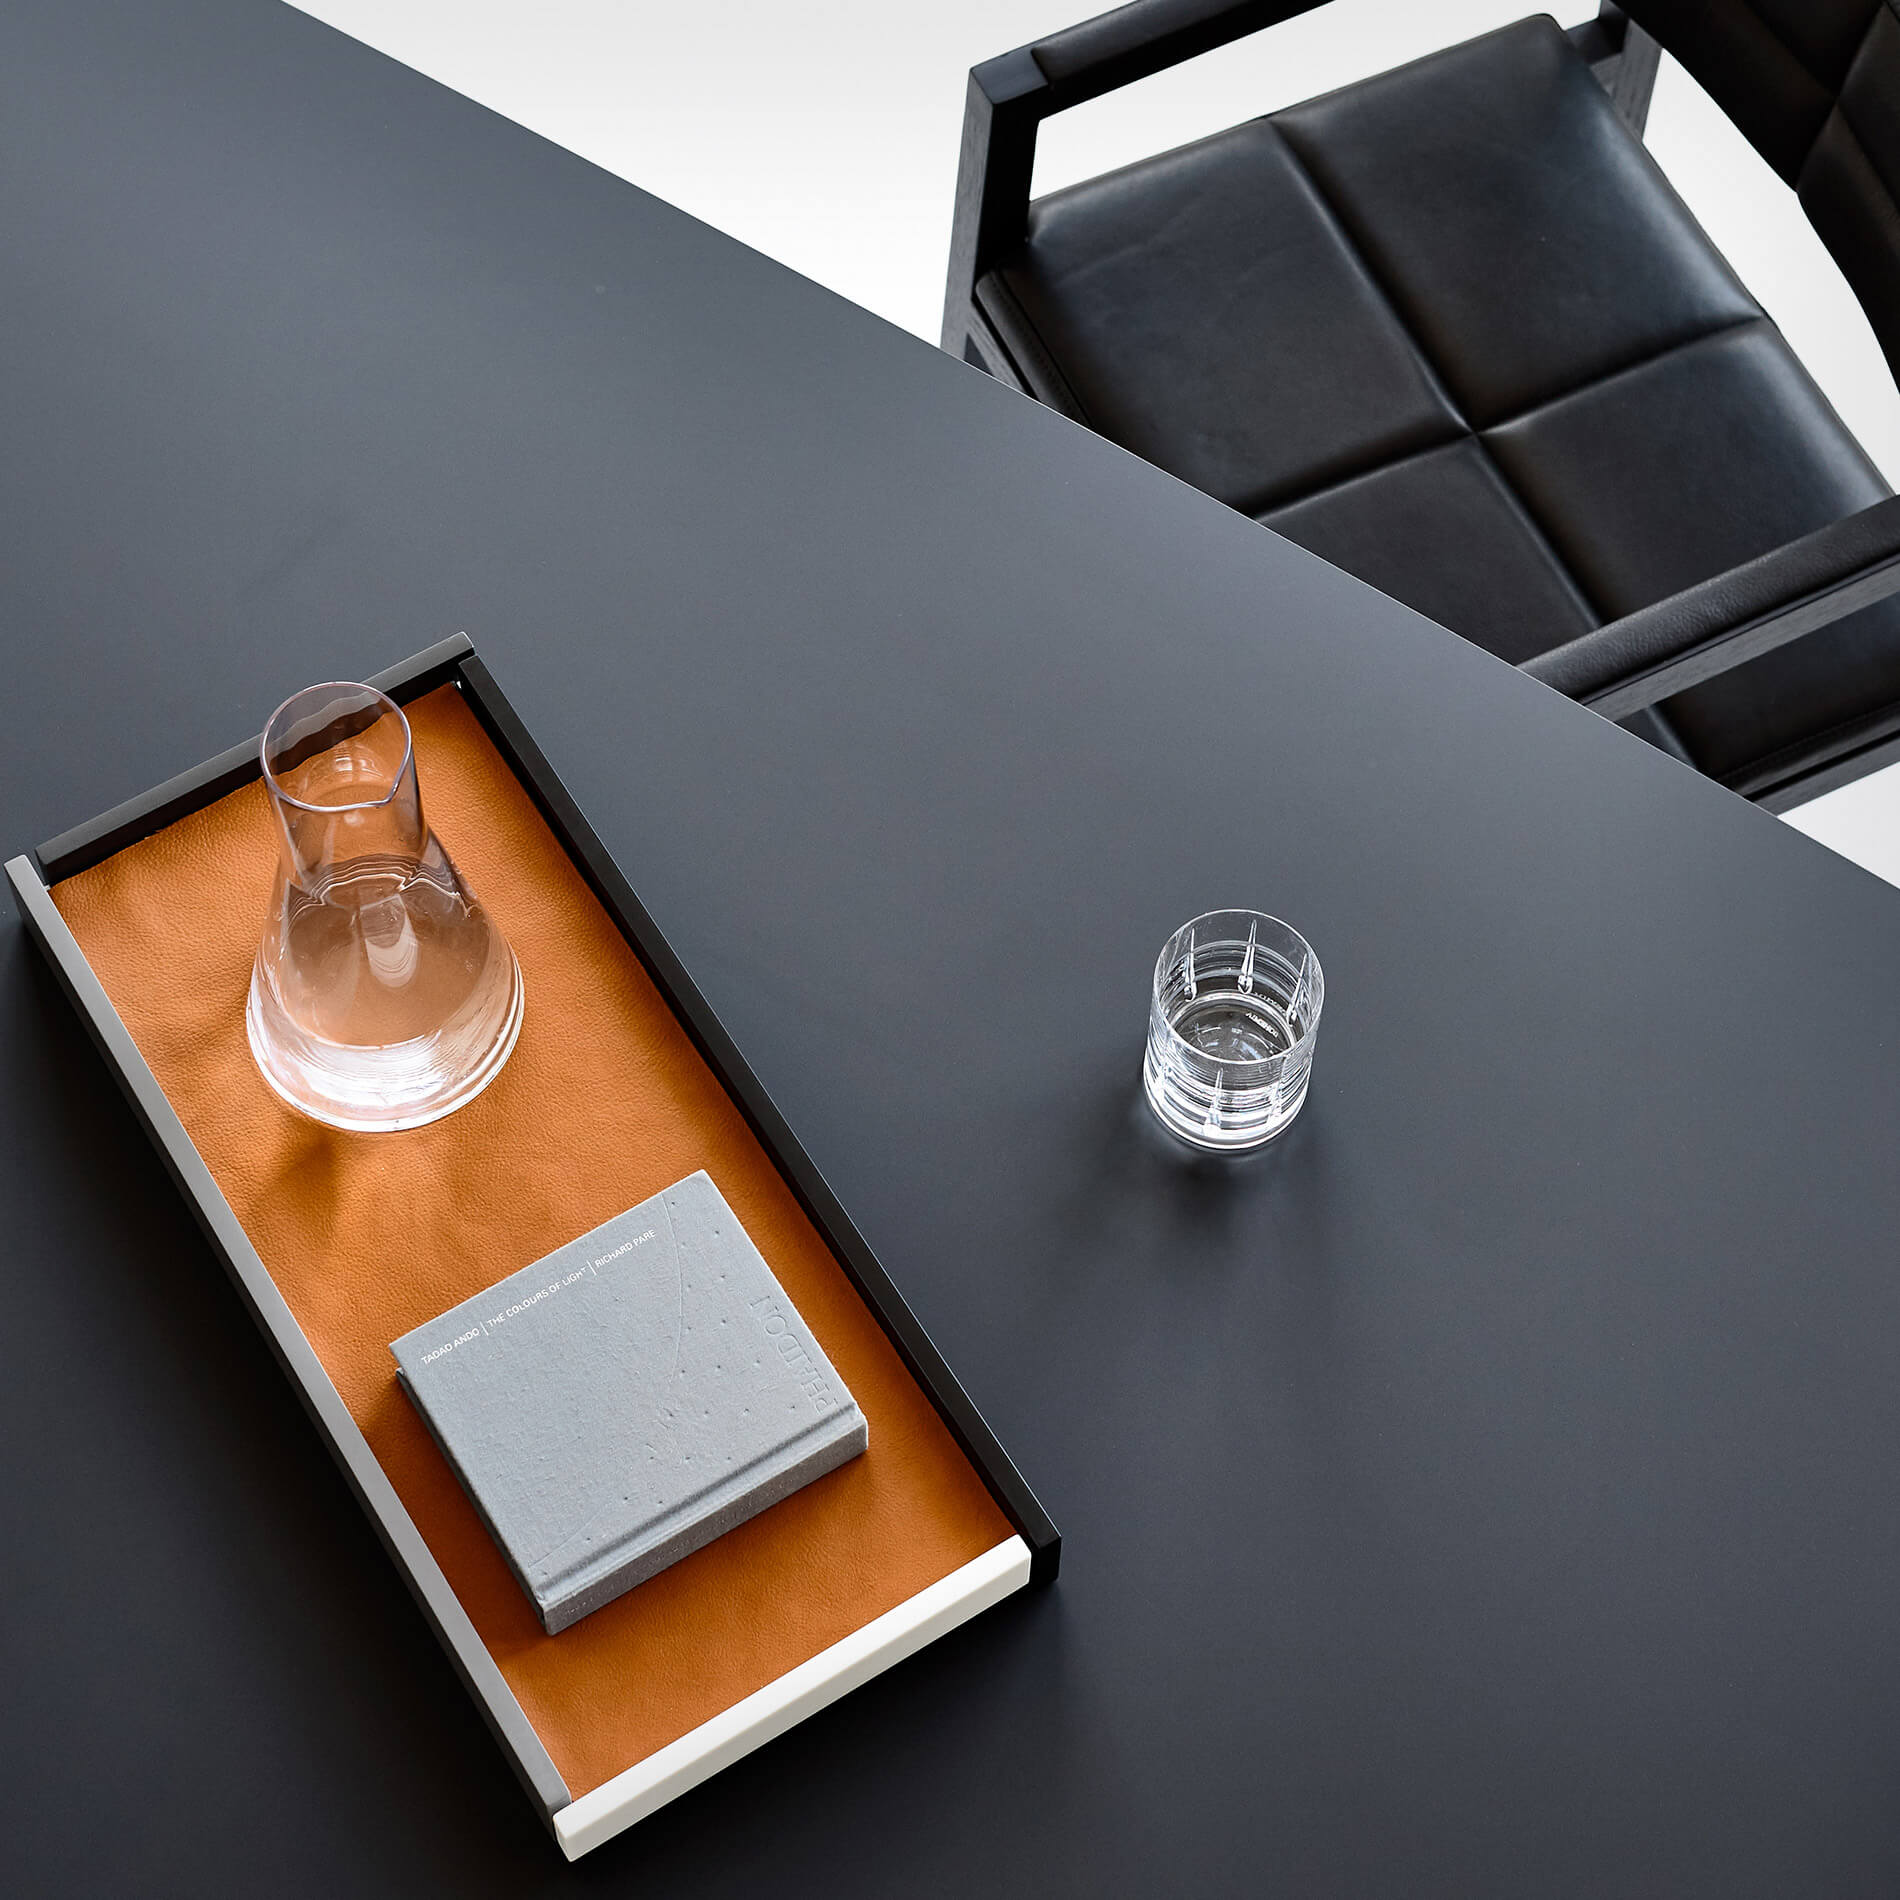 Birdseye view of this anti fingerprint designer table top by Australian designer FrancoCrea utilising the innovative material Fenix